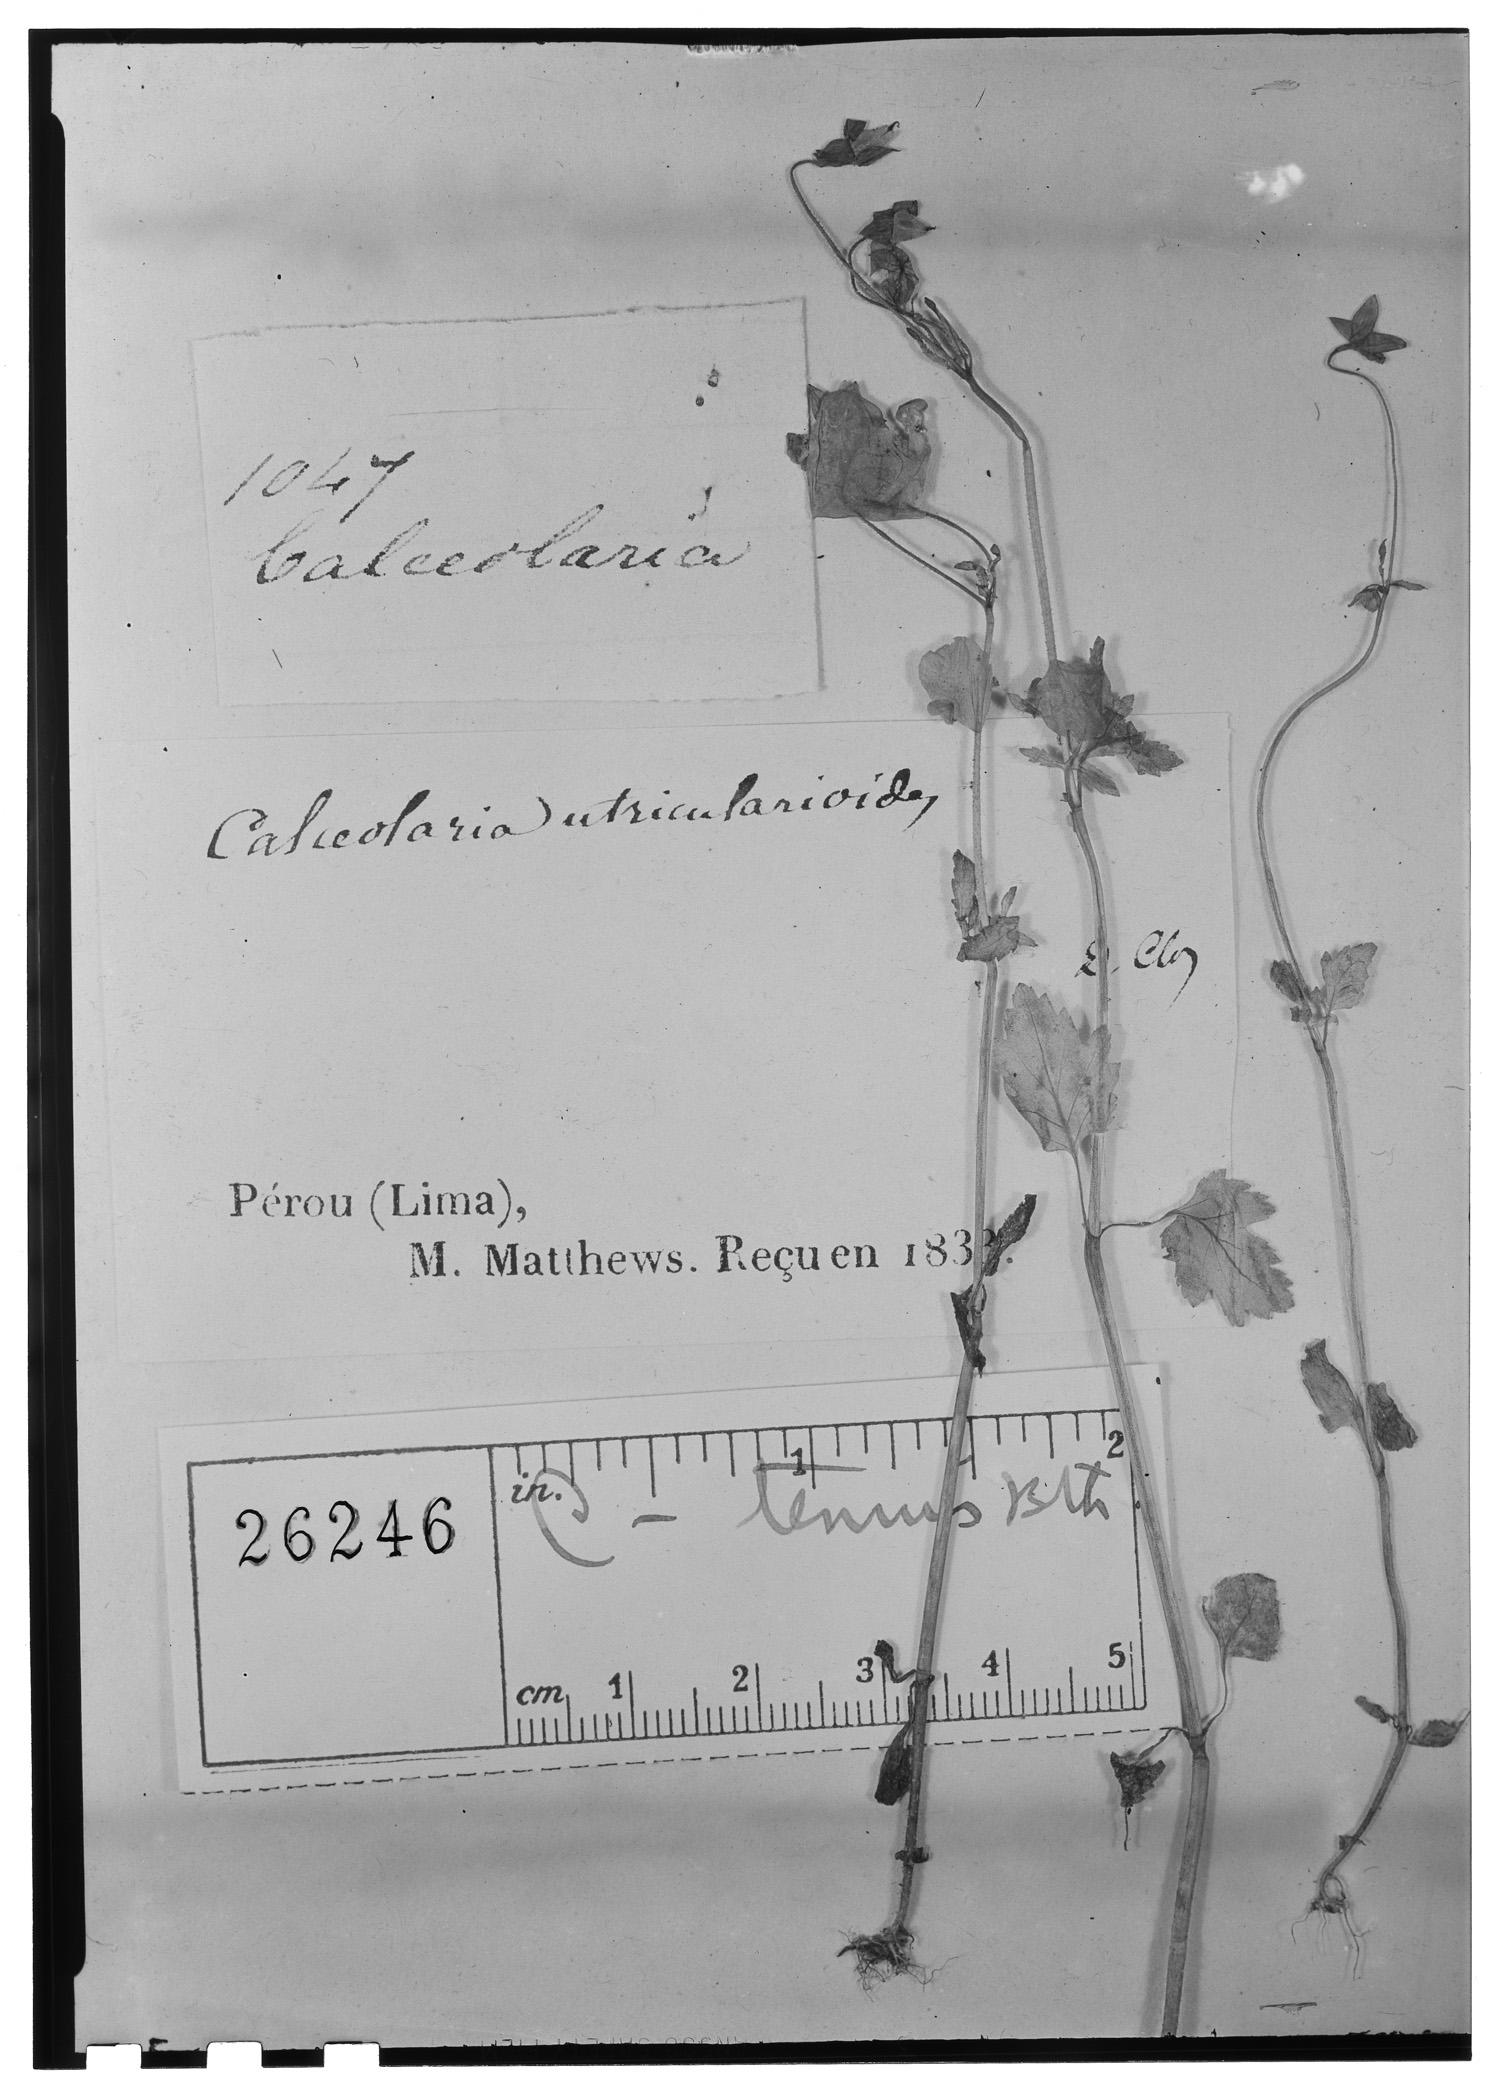 Calceolaria tenuis image